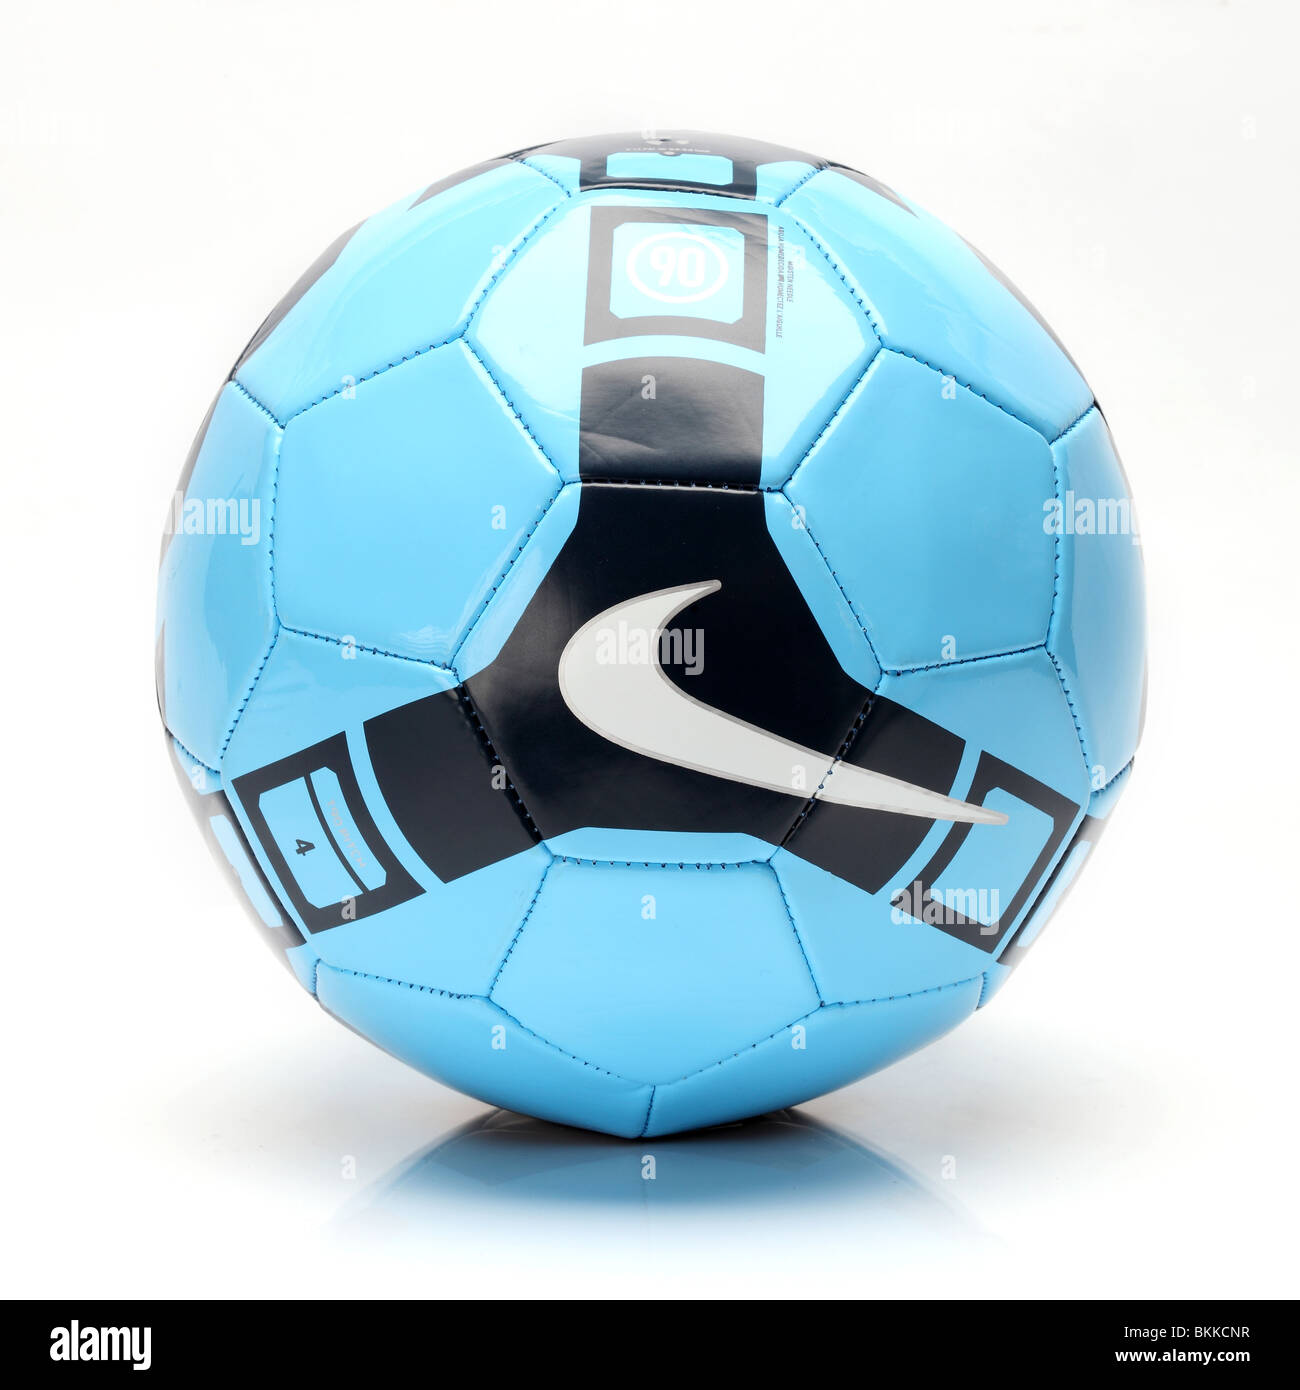 Nike team foot ball soccer football T 90 blue black Stock Photo